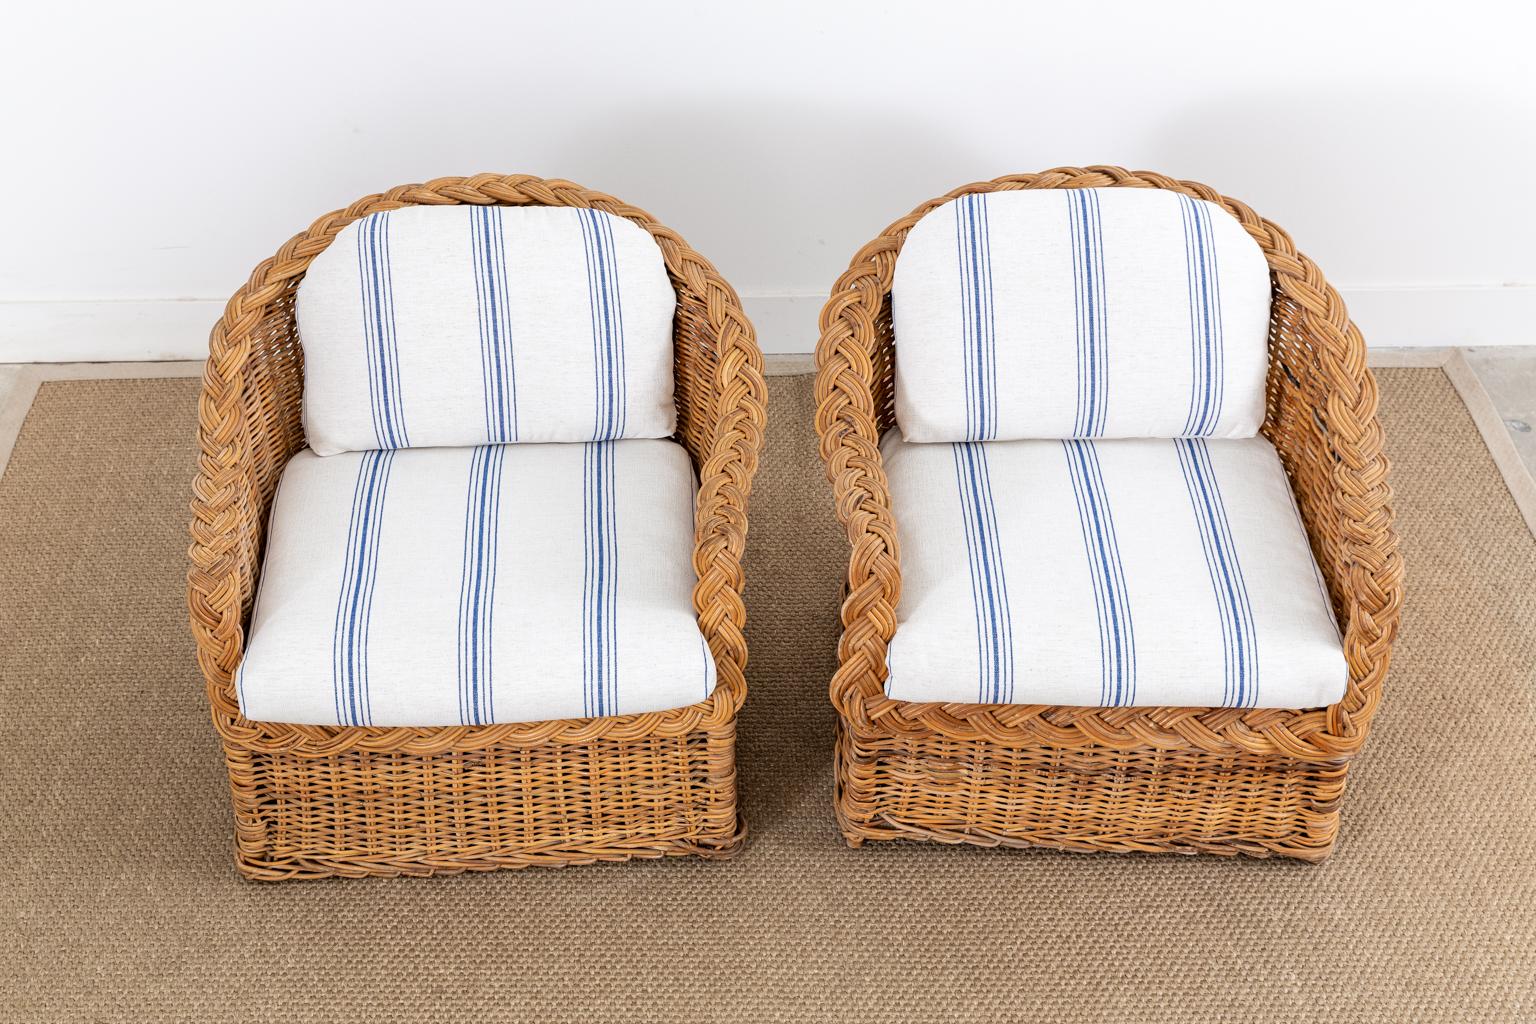 American Pair of Organic Modern Woven Rattan Wicker Lounge Chairs